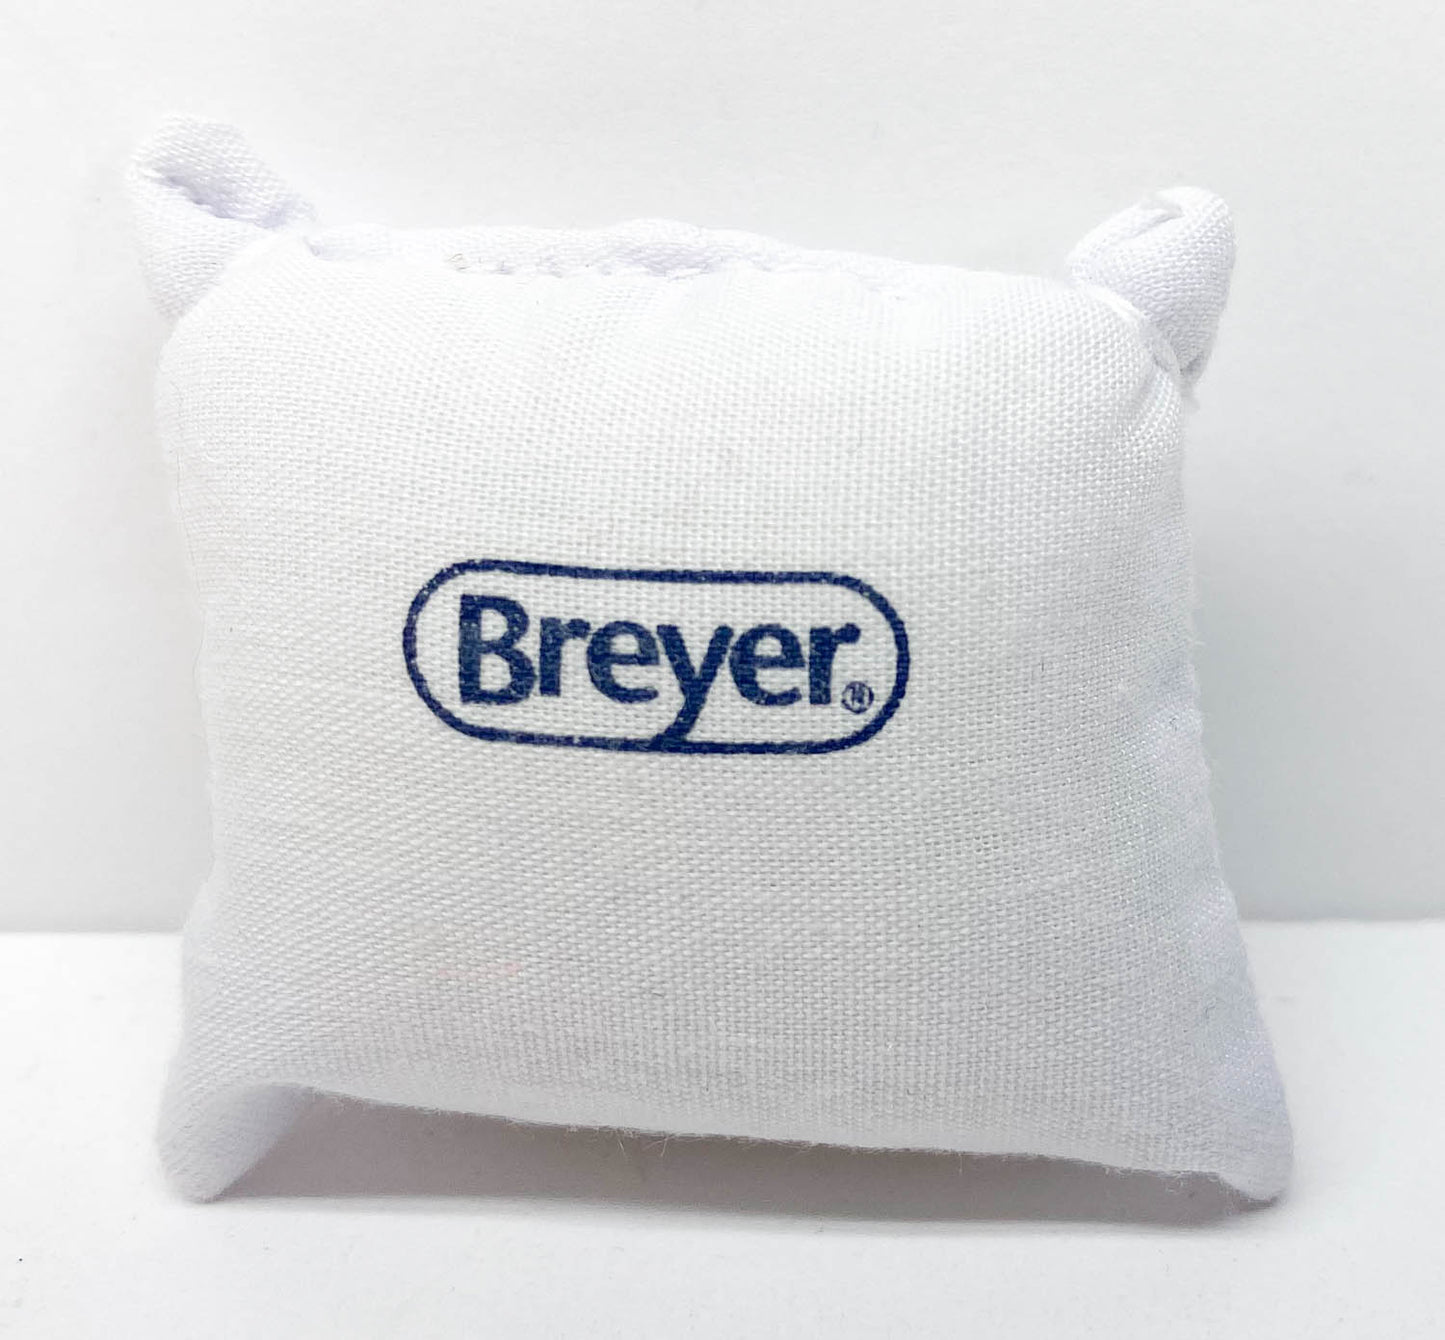 Breyer Feed bag - Classic Size